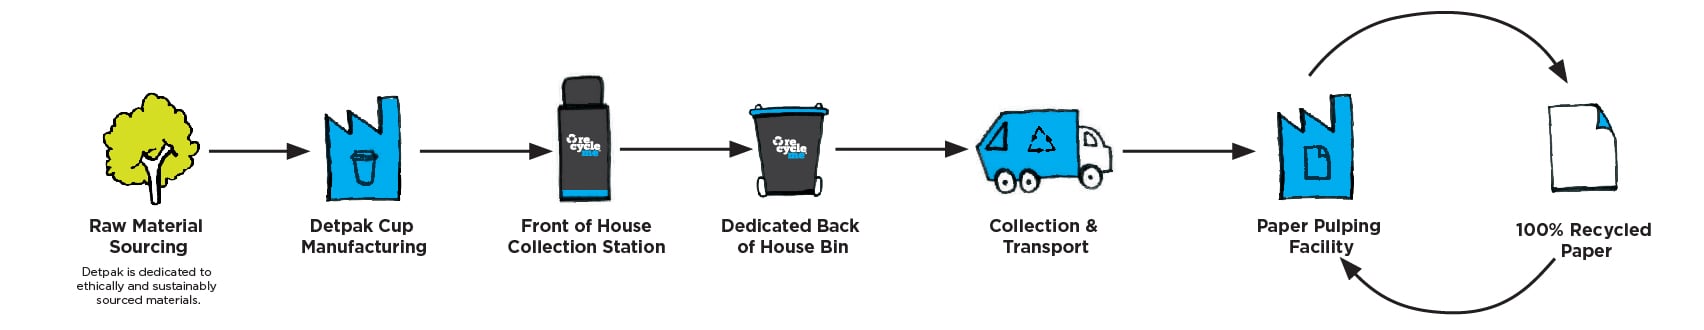 RecycleMe Guarantee Recycling Diagram